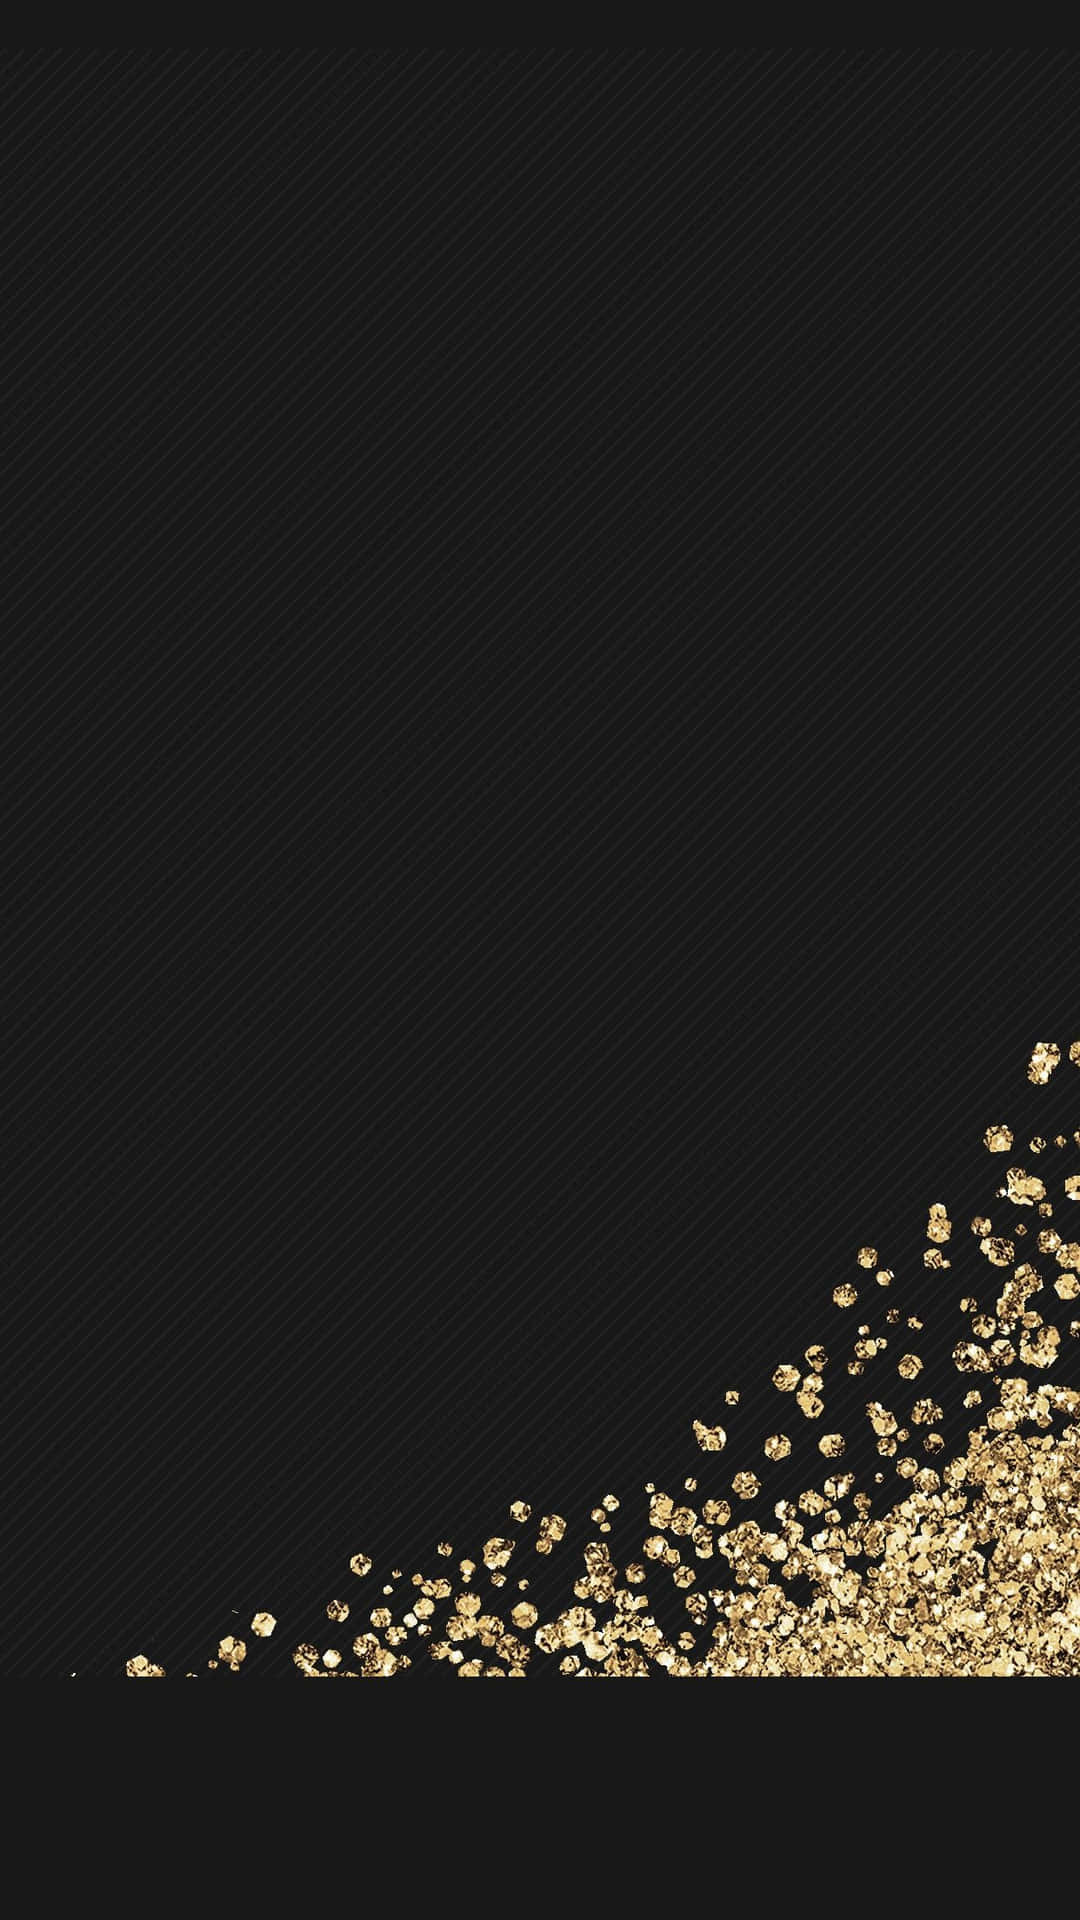 Minimalist Black And Gold Glitter Phone Wallpaper